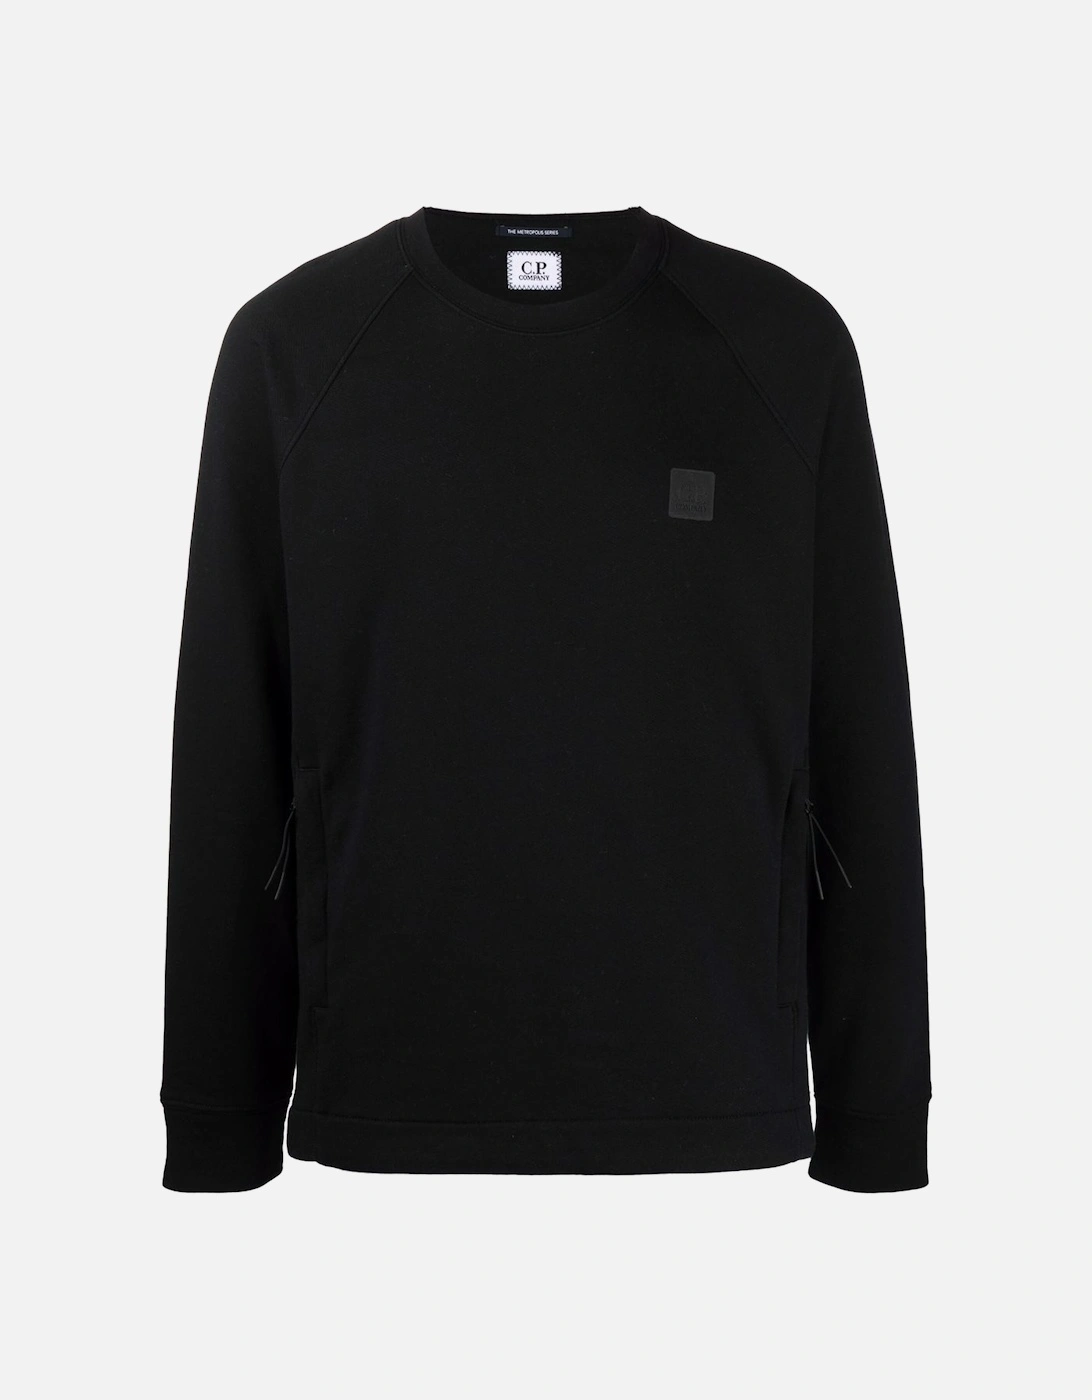 C.P. Company Metropolis Series Diagonal Raised Fleece Sweatshirt in Black, 6 of 5